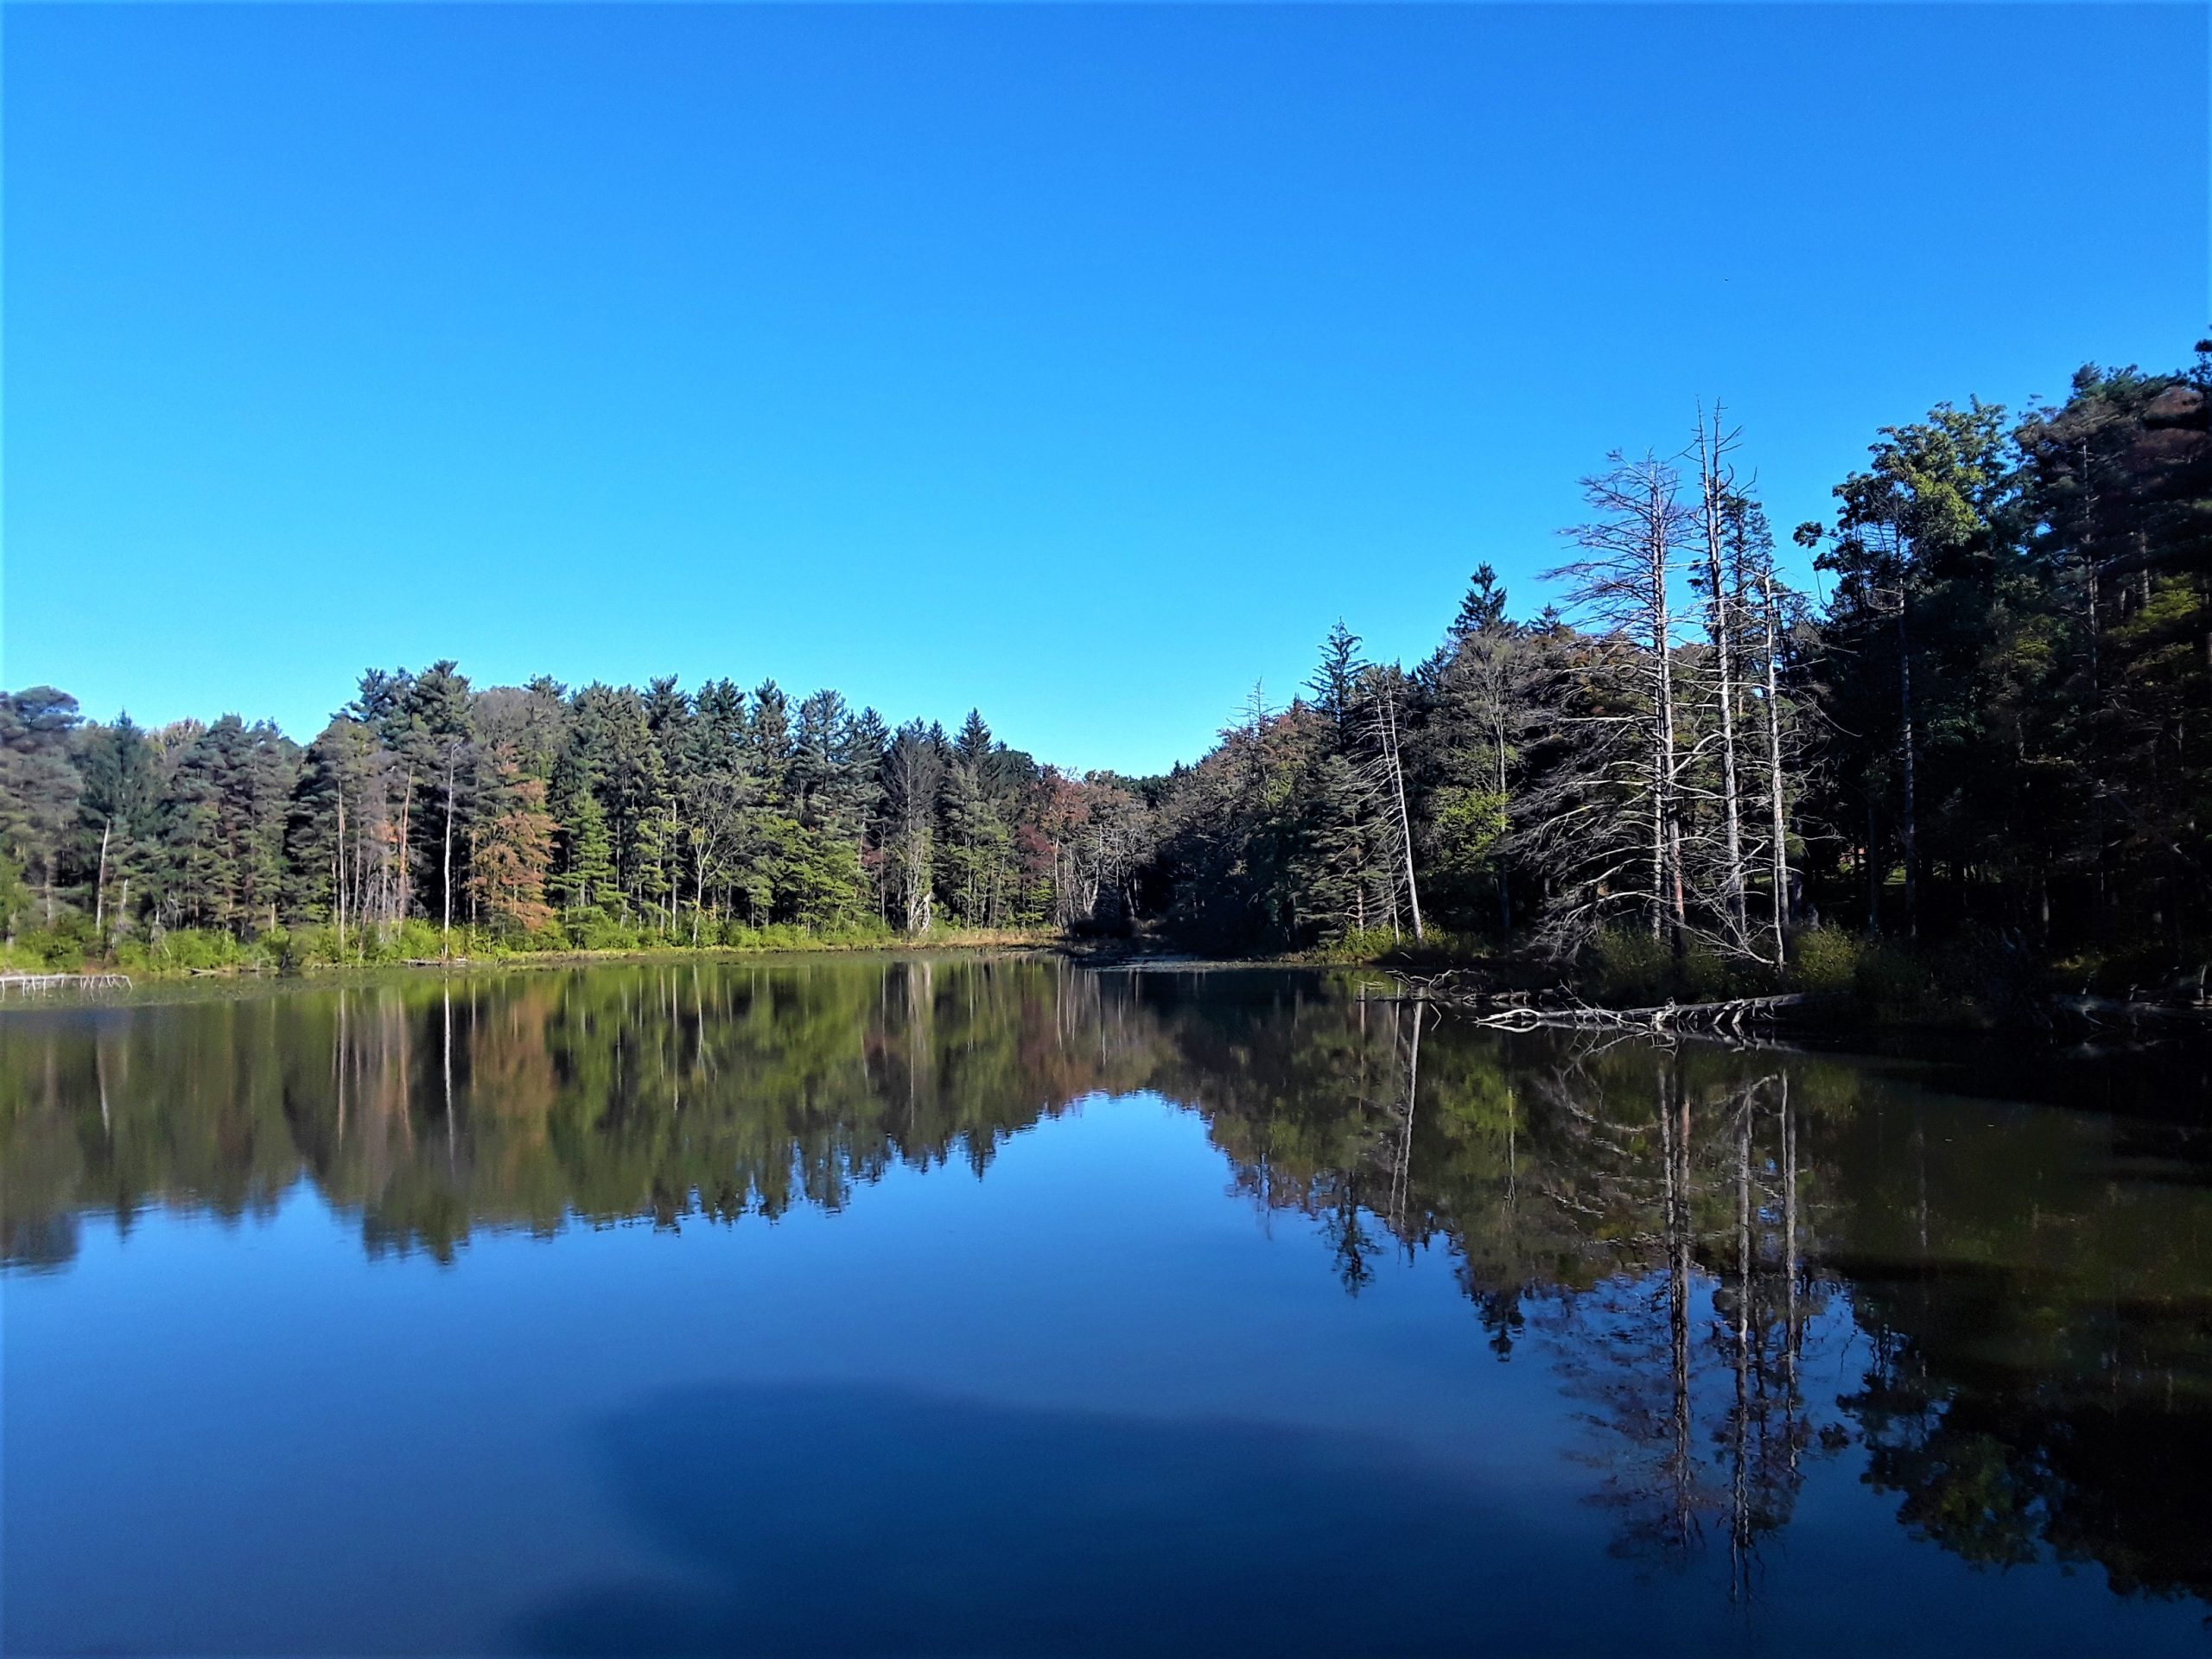 Lake Linnea water reflects the trees surrounding it